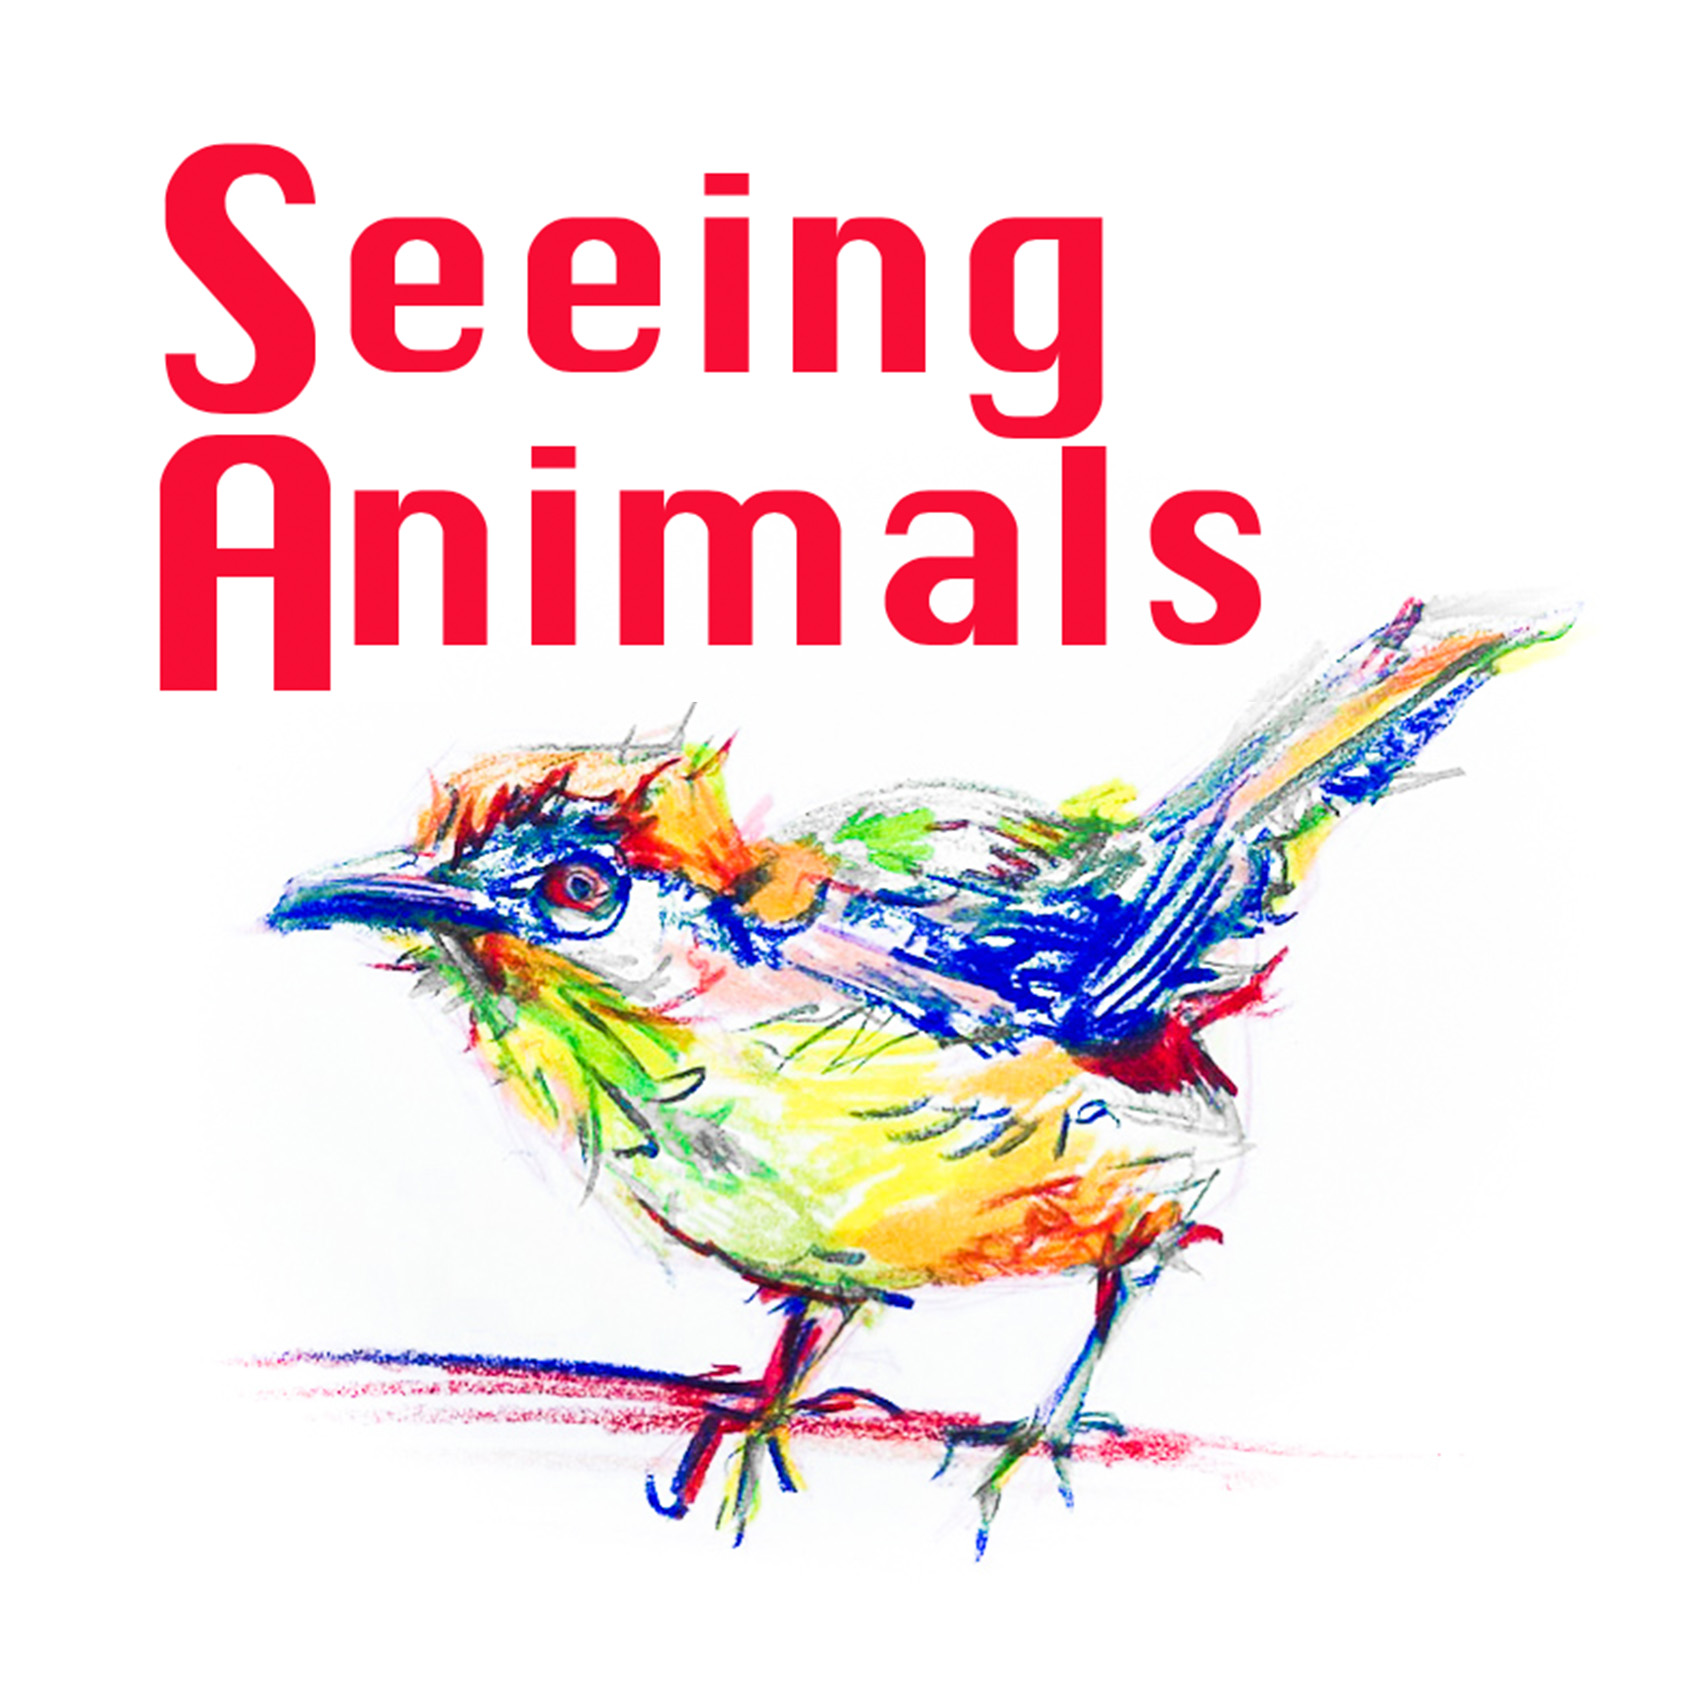 Seeing Animals